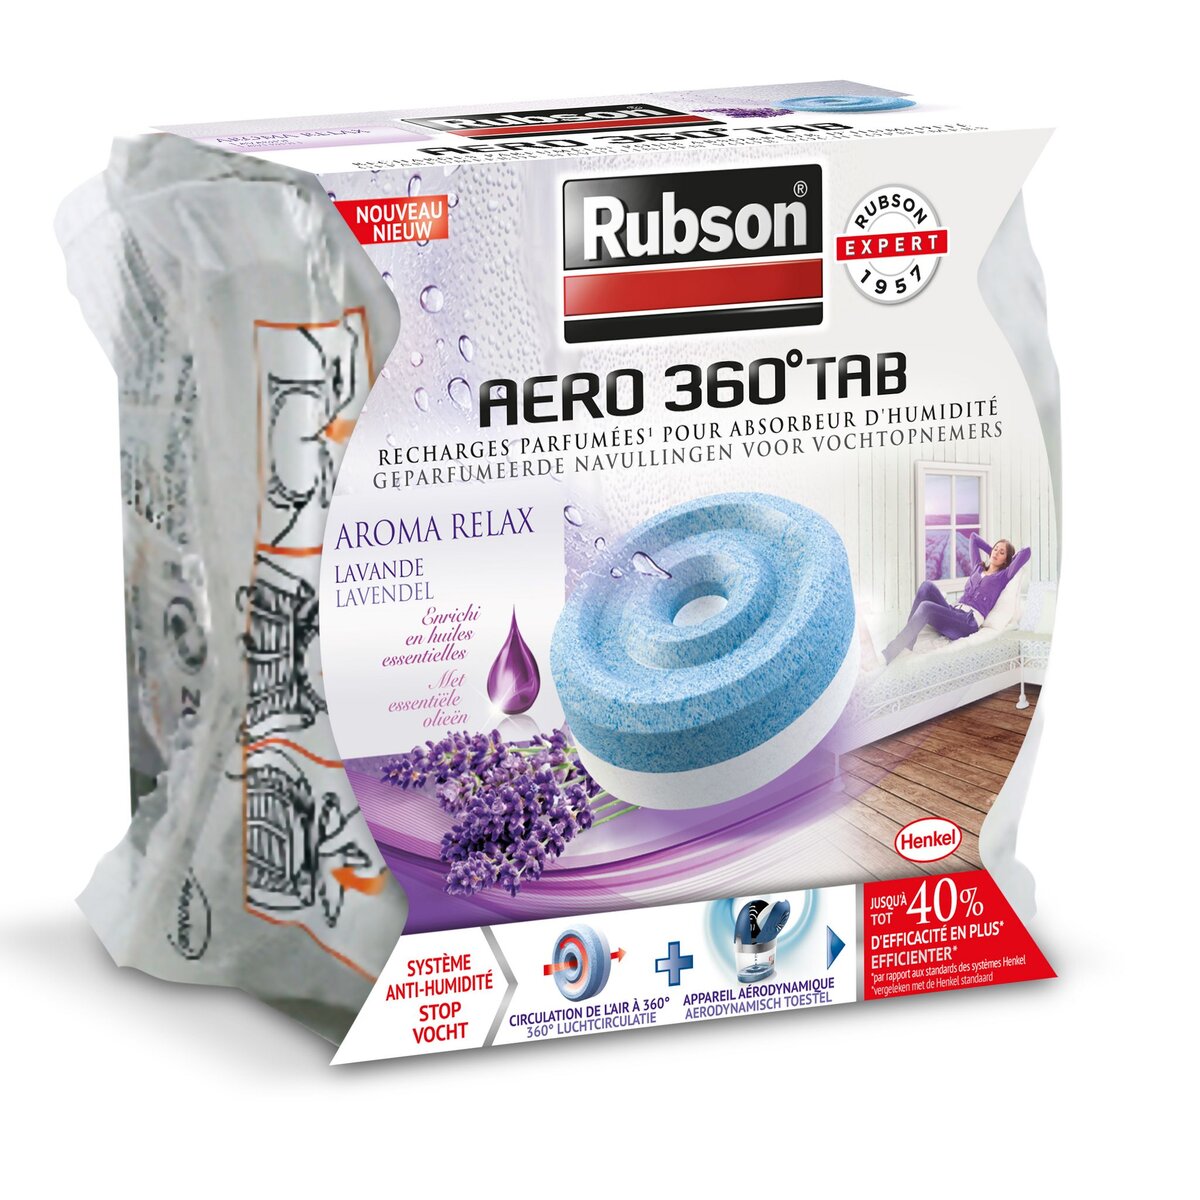 RUBSON Recharge AERO 360 Aroma Relax Lavande